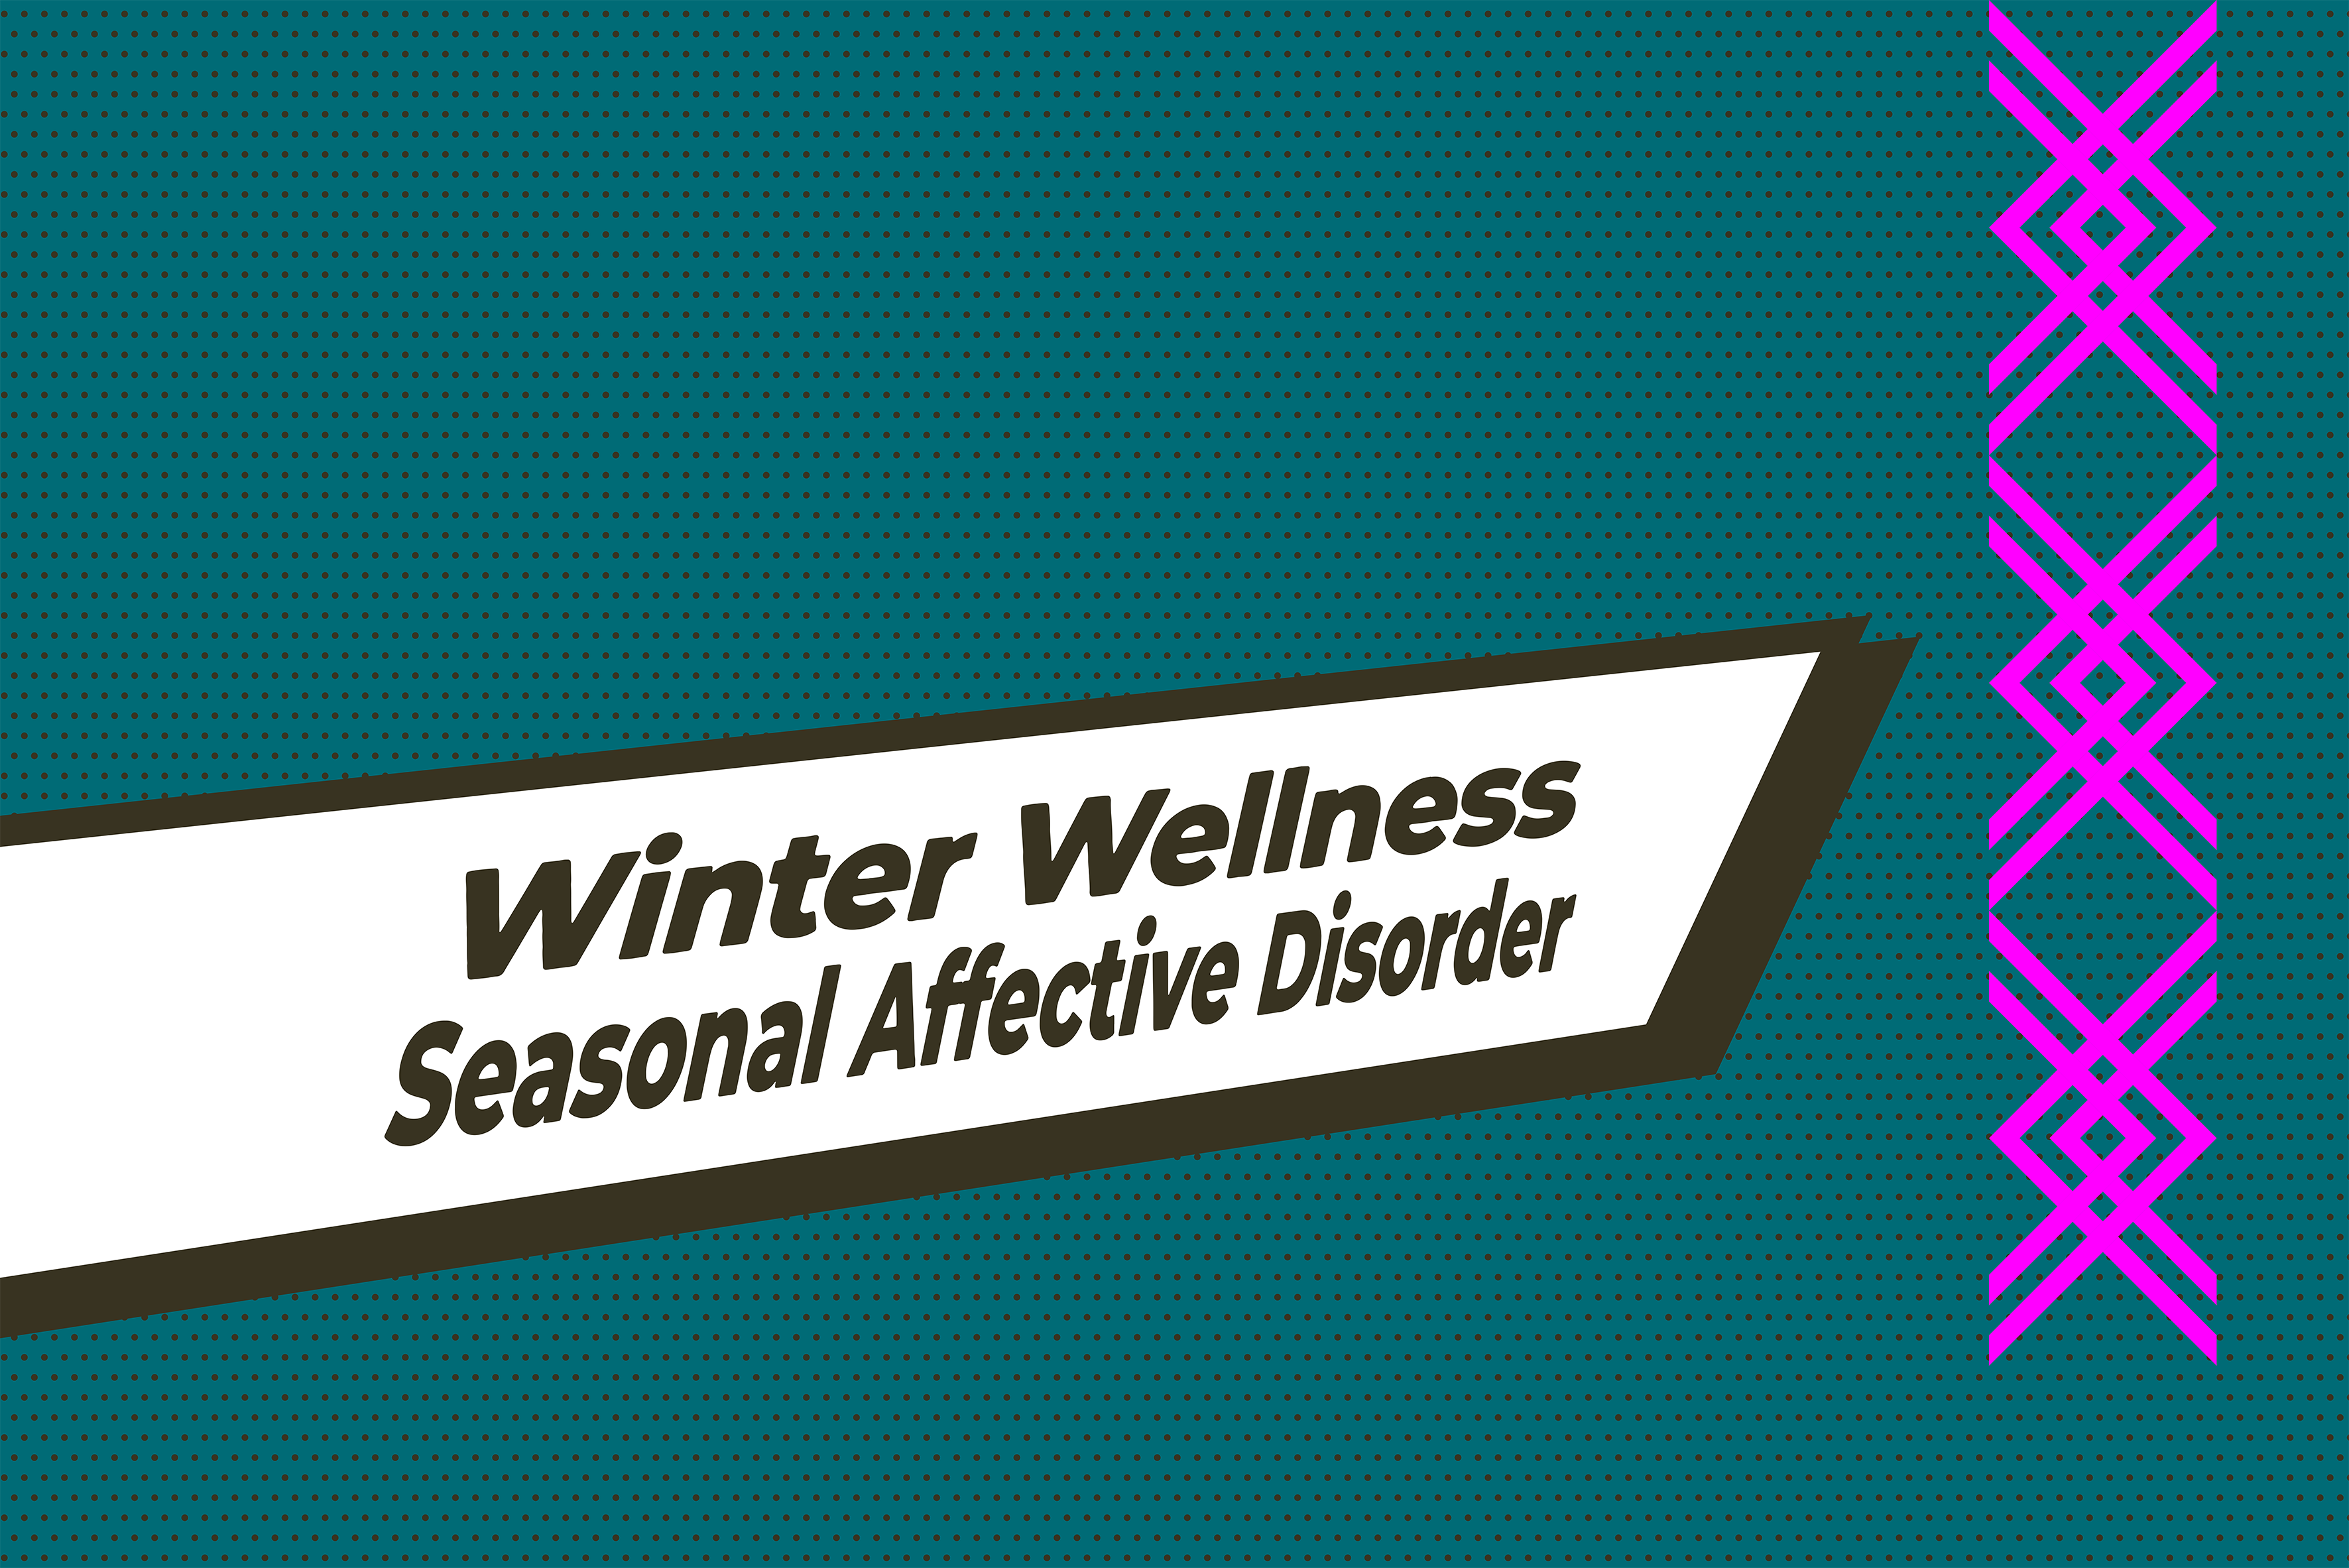 Seasonal affective disorder website banner